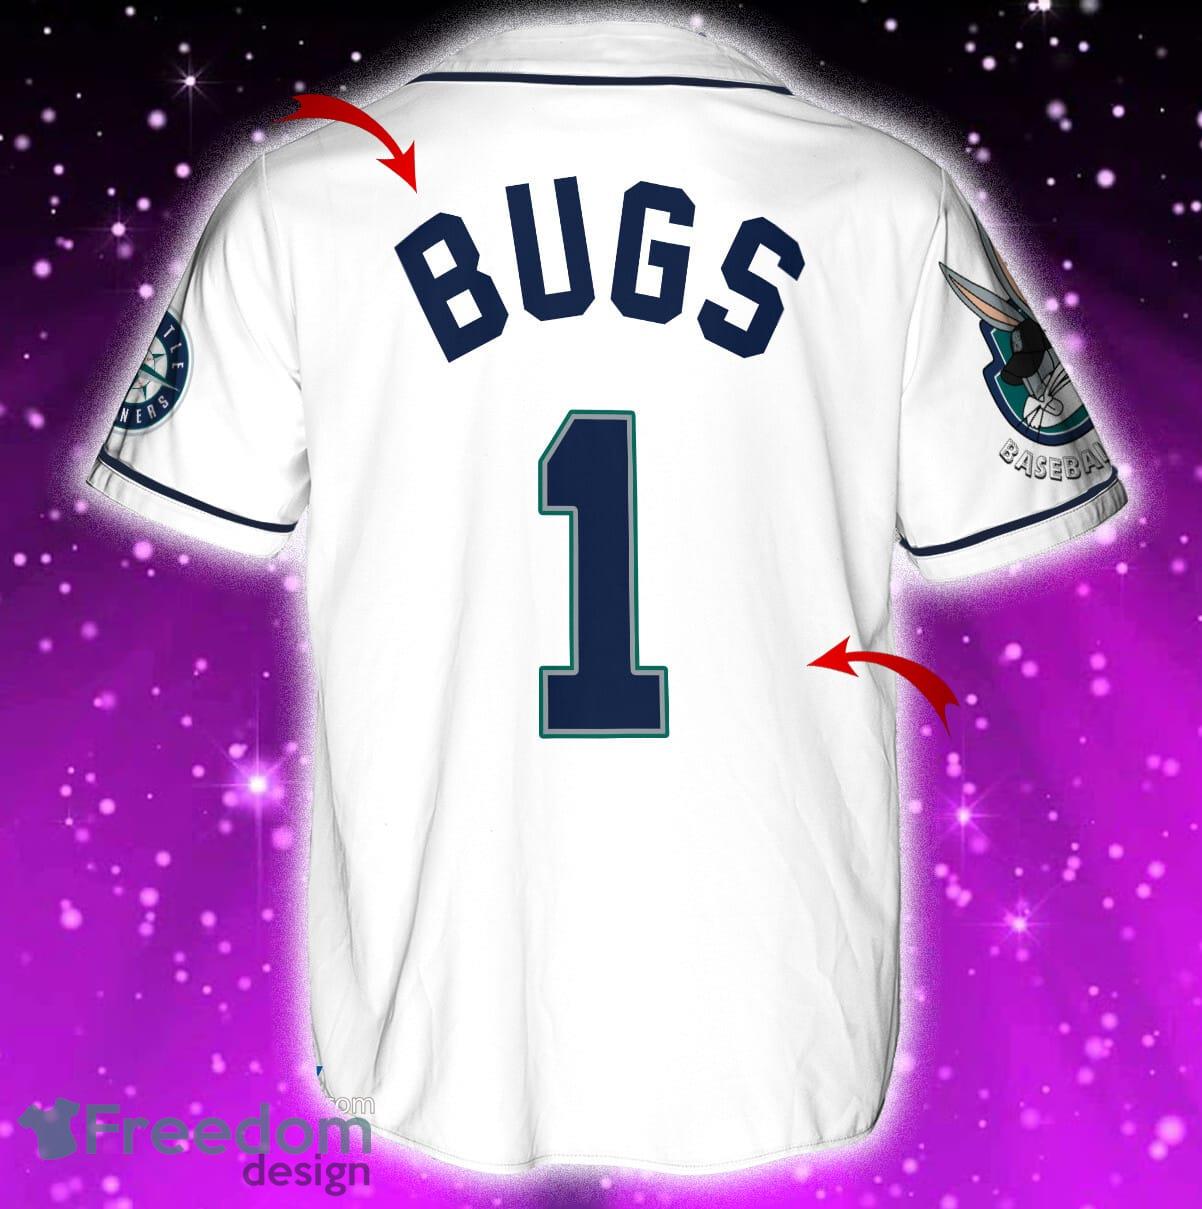 Seattle Mariners Bugs Bunny Baseball Jersey - Aqua - Scesy